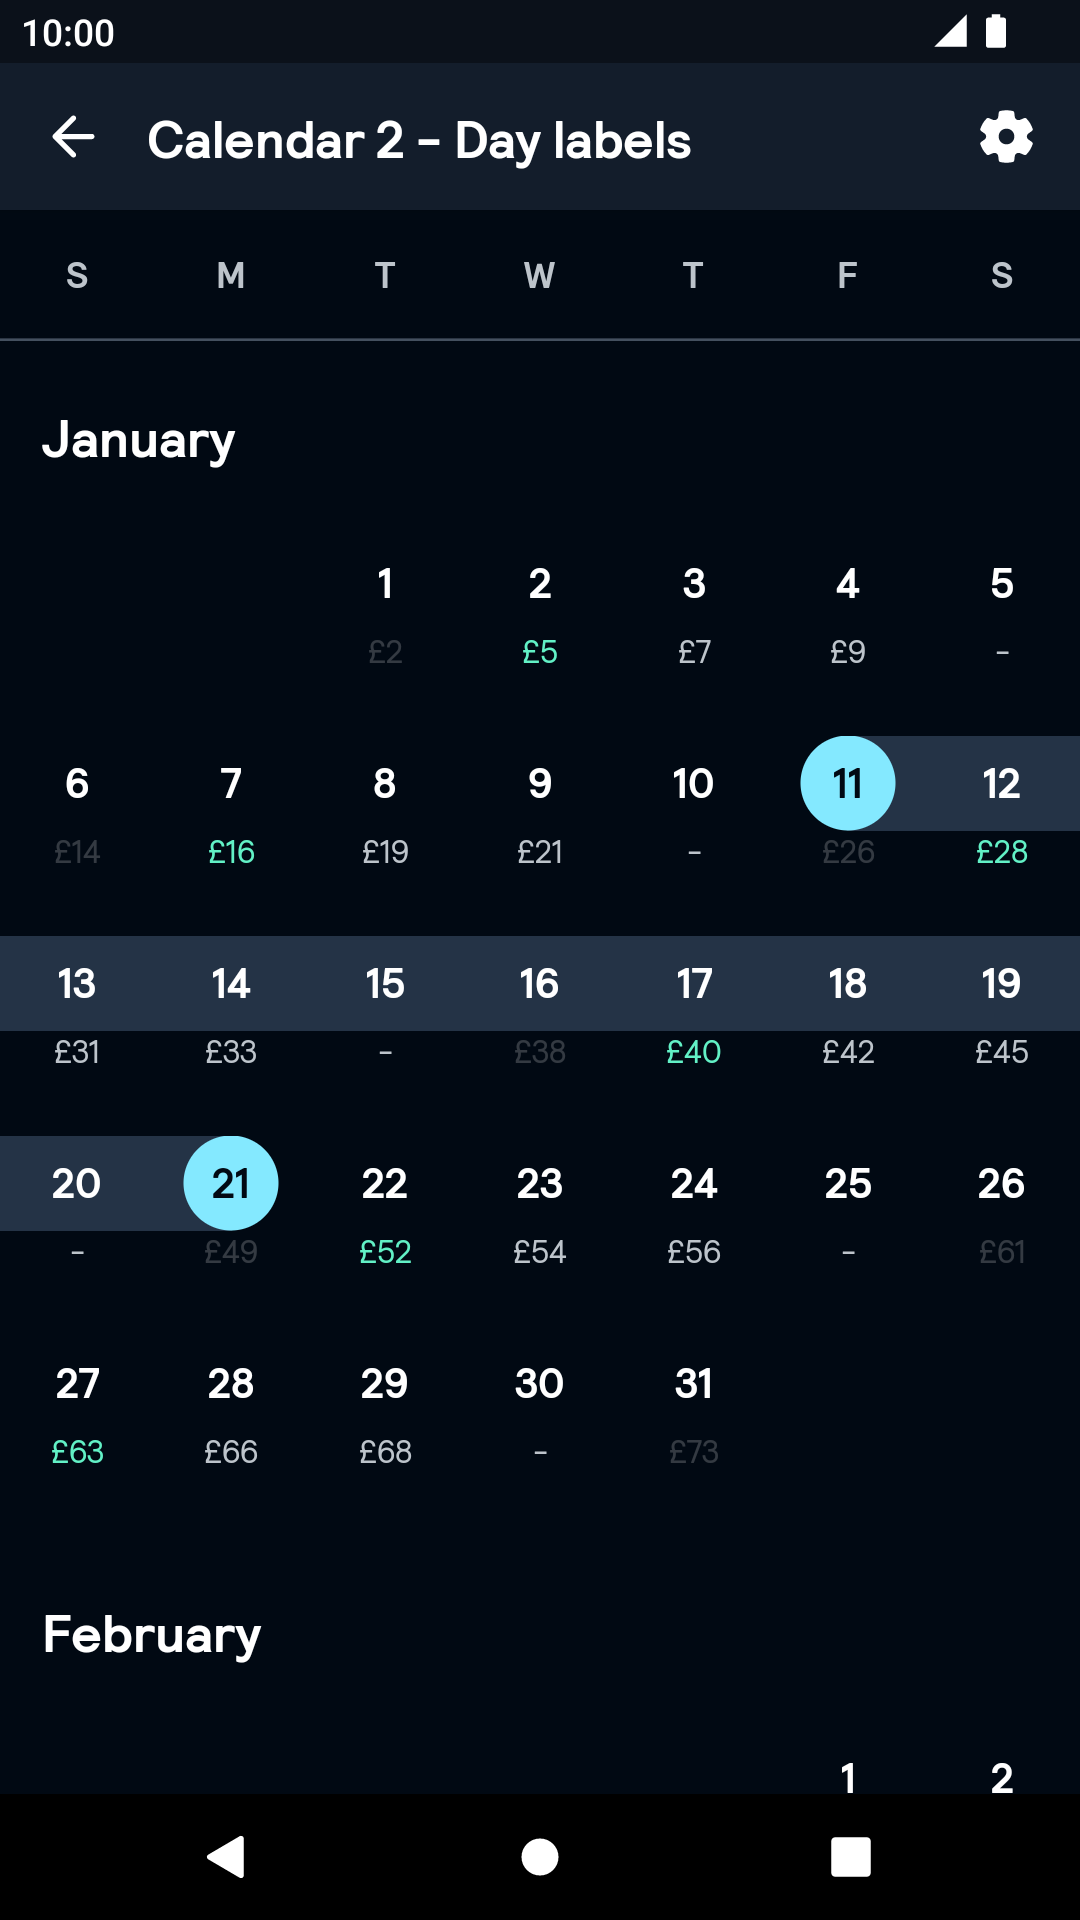 Labeled Calendar2 component - dark mode